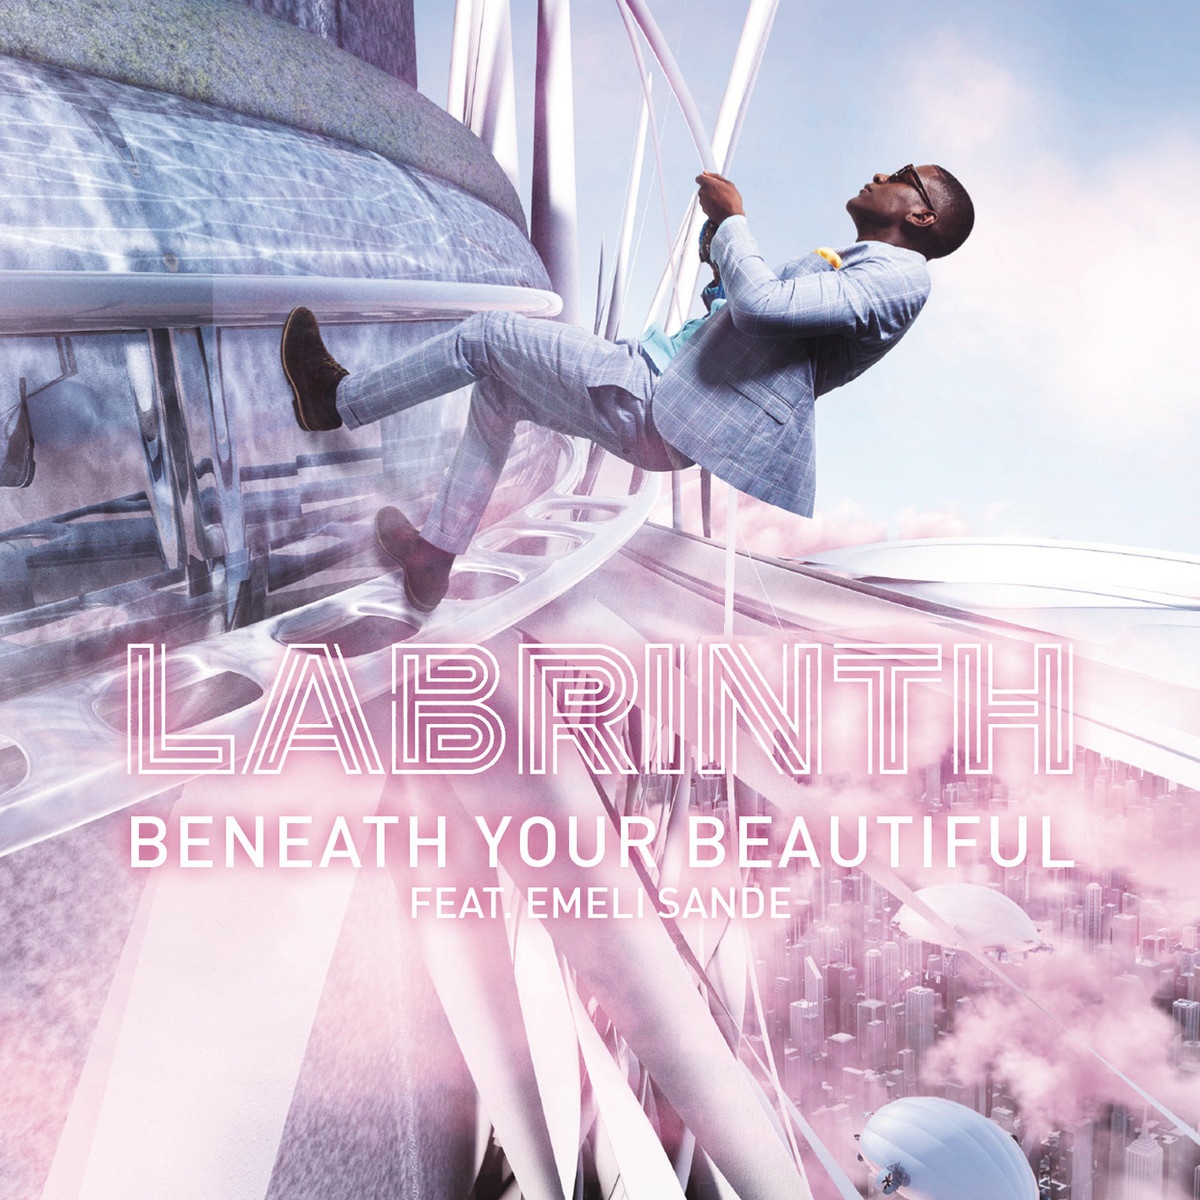 Beneath Your Beautiful feat. Emeli Sande  Seamus Haji Remix Extended